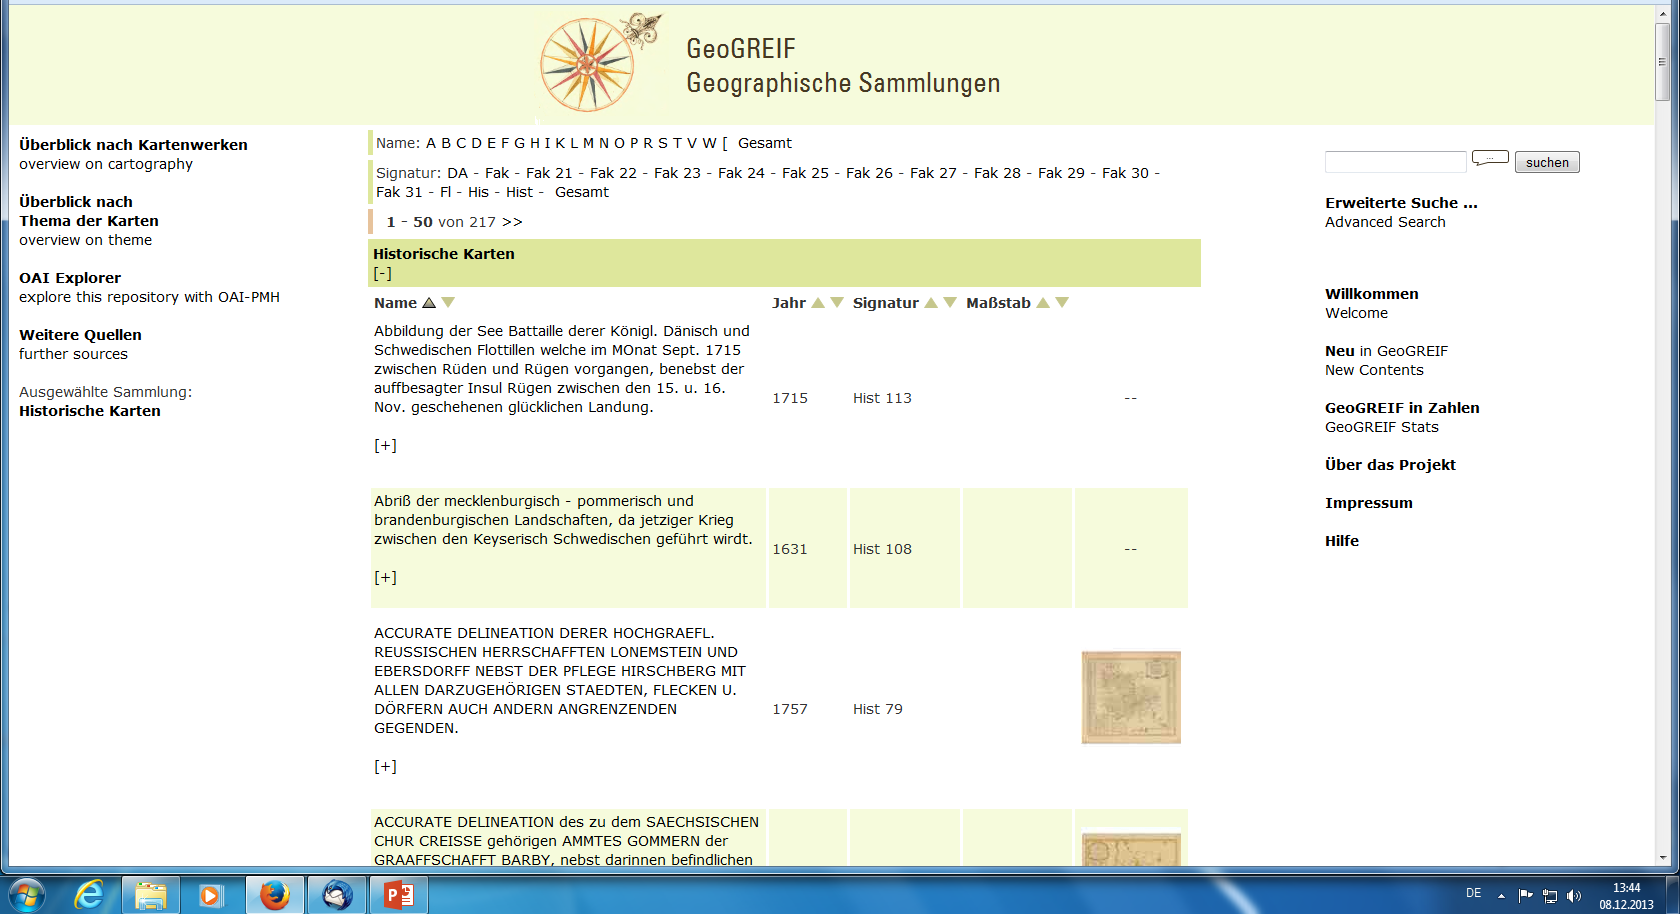 http://greif.uni-greifswald.de/geogreif/?